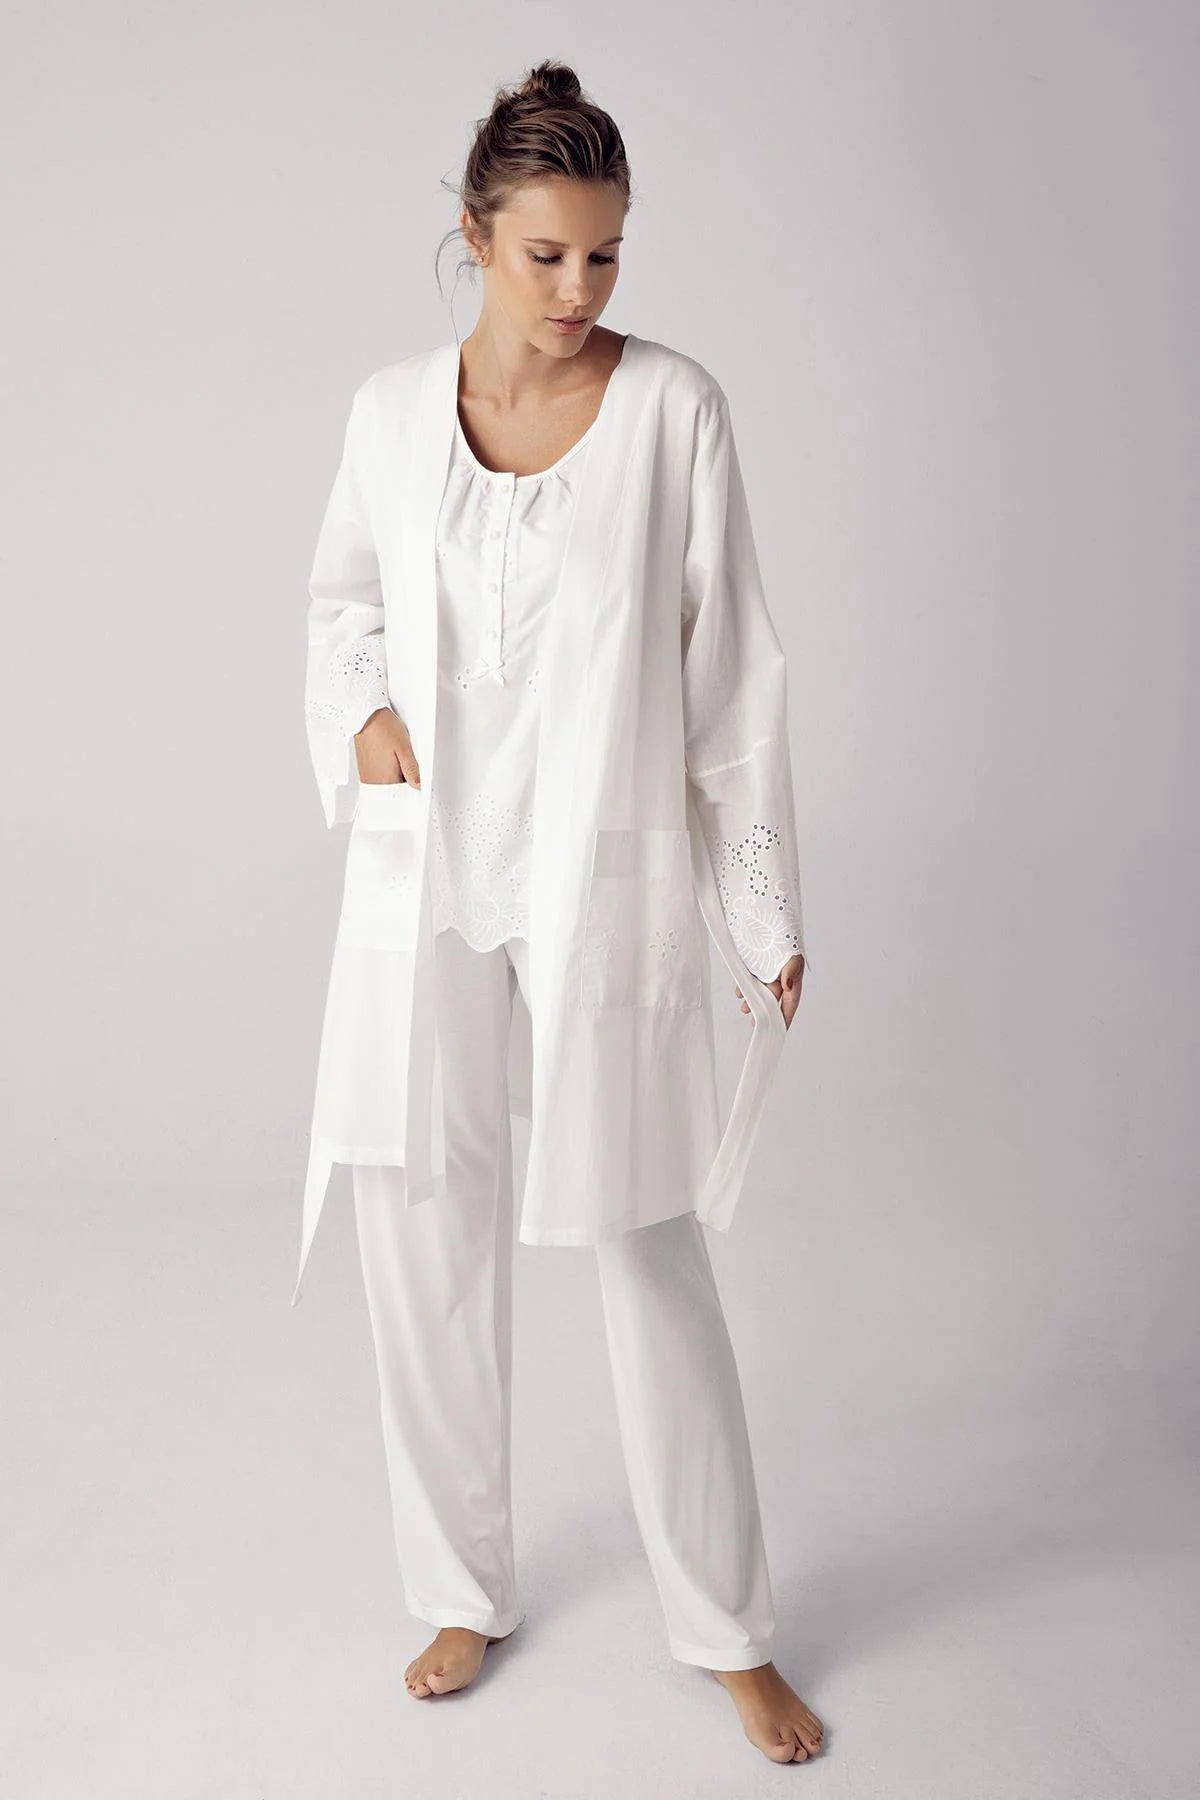 Shopymommy 12311 Woven 3-Pieces Maternity & Nursing Pajamas With Robe Ecru